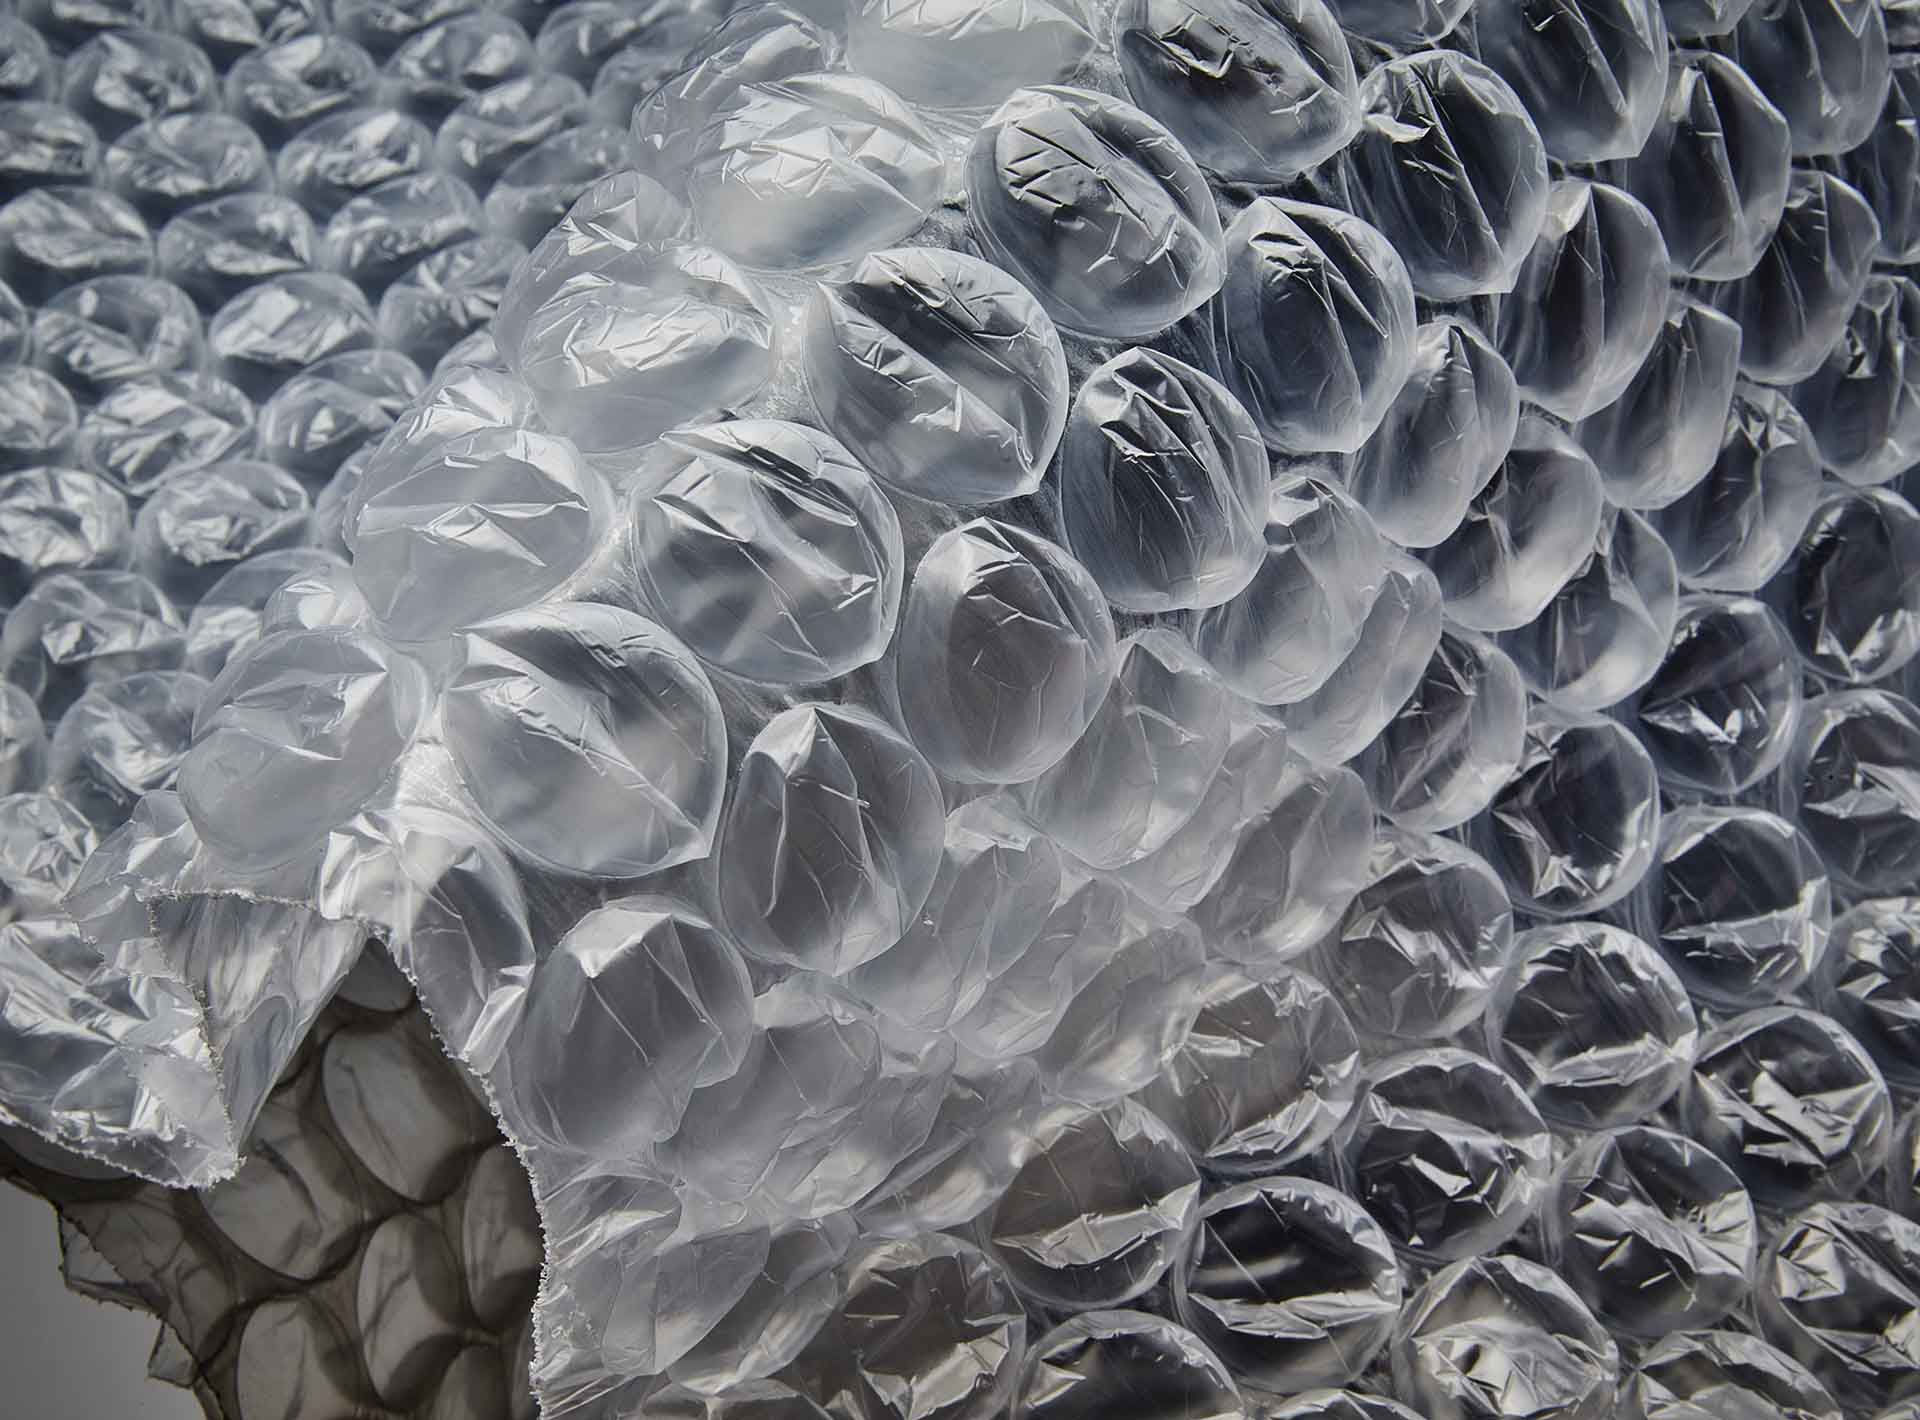 Bubble wrap - Wikipedia